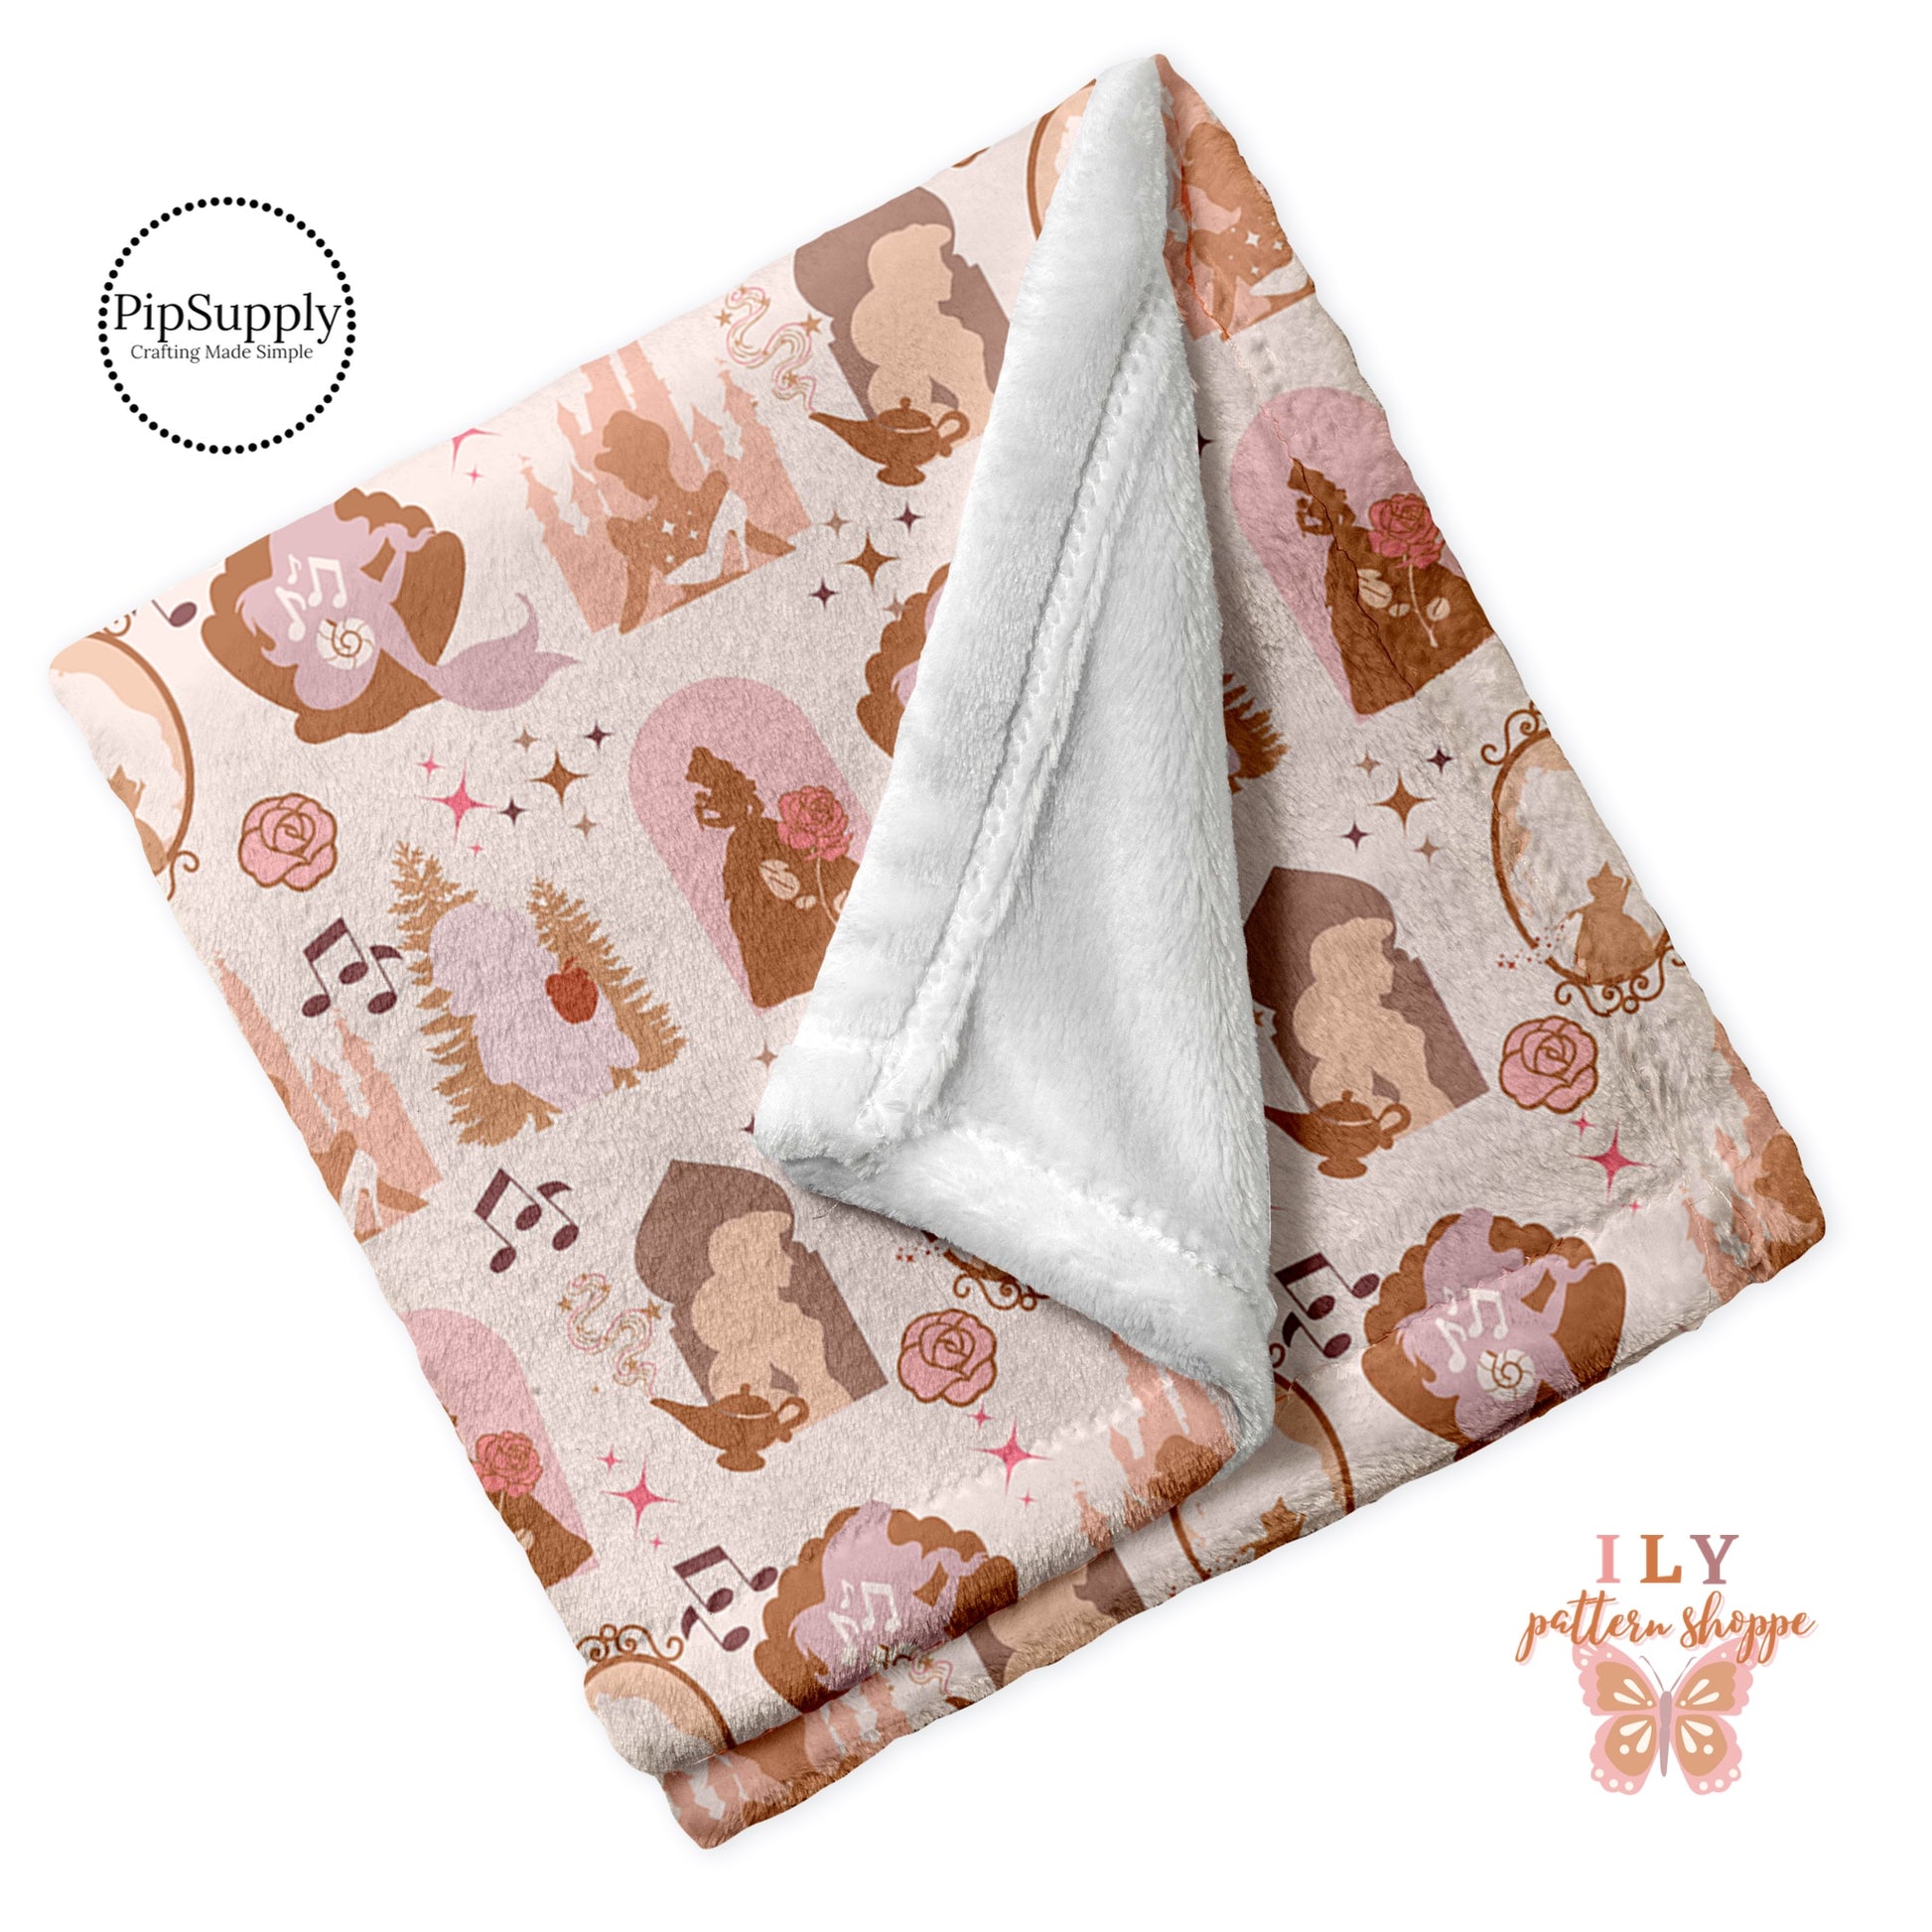 Princess Fairy Tale Custom Printed Blanket - Personalized Minky Blanket Pink, Cream and Brown